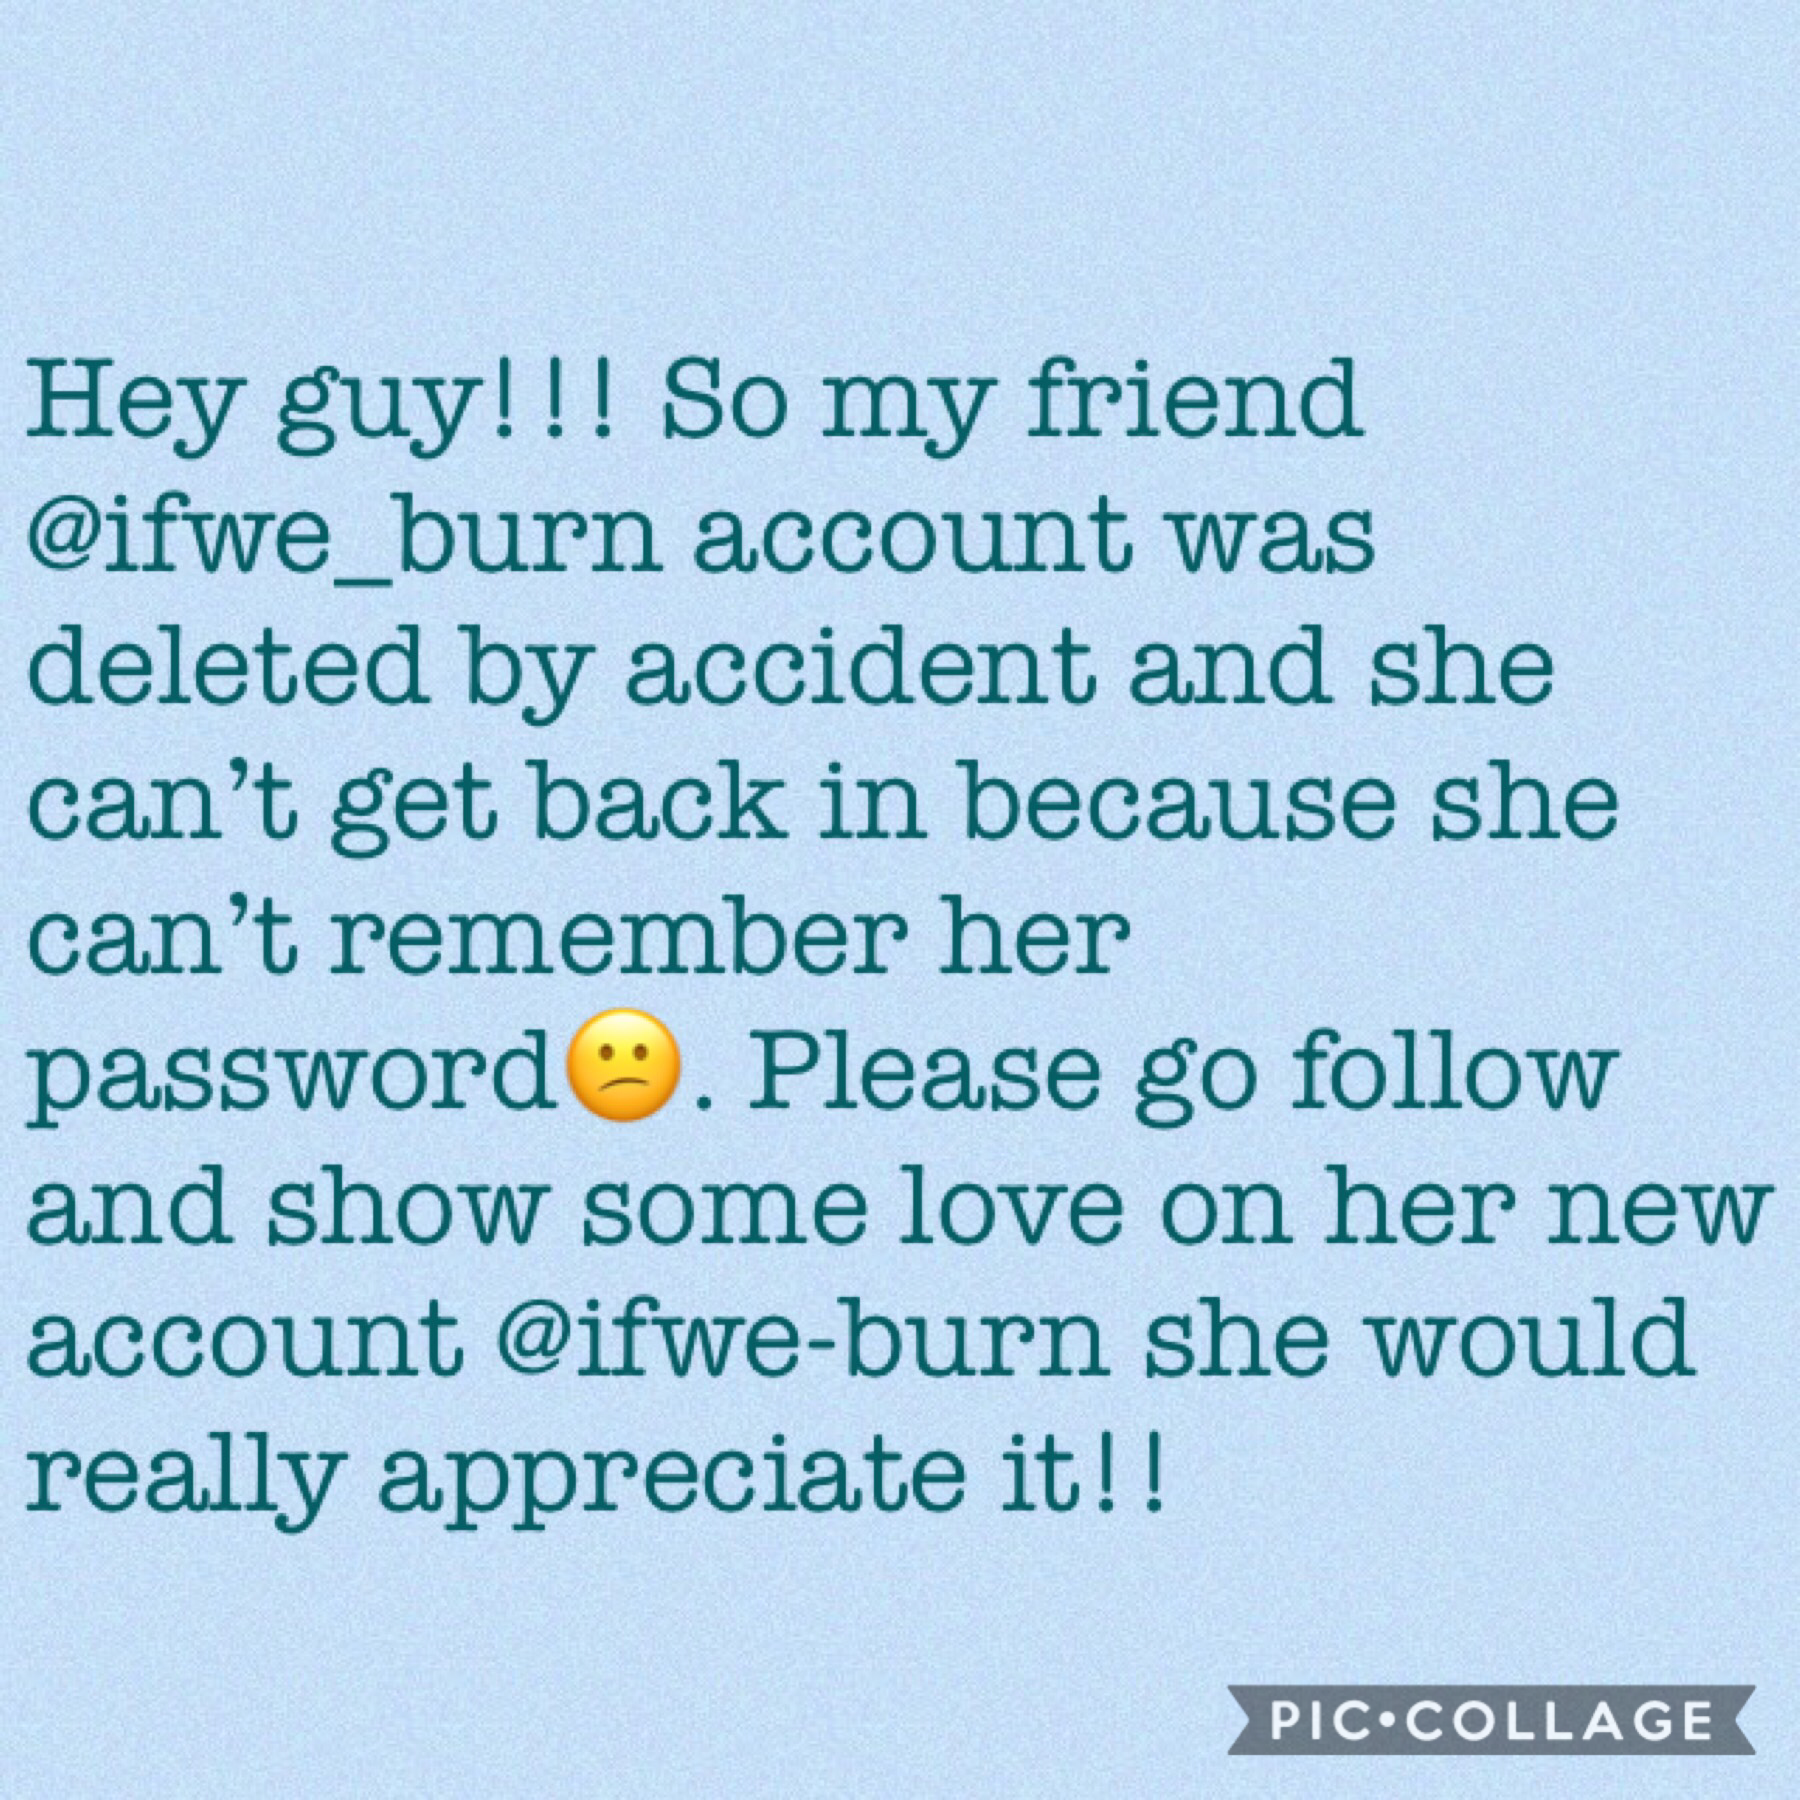 Tap
Please go follow her!!